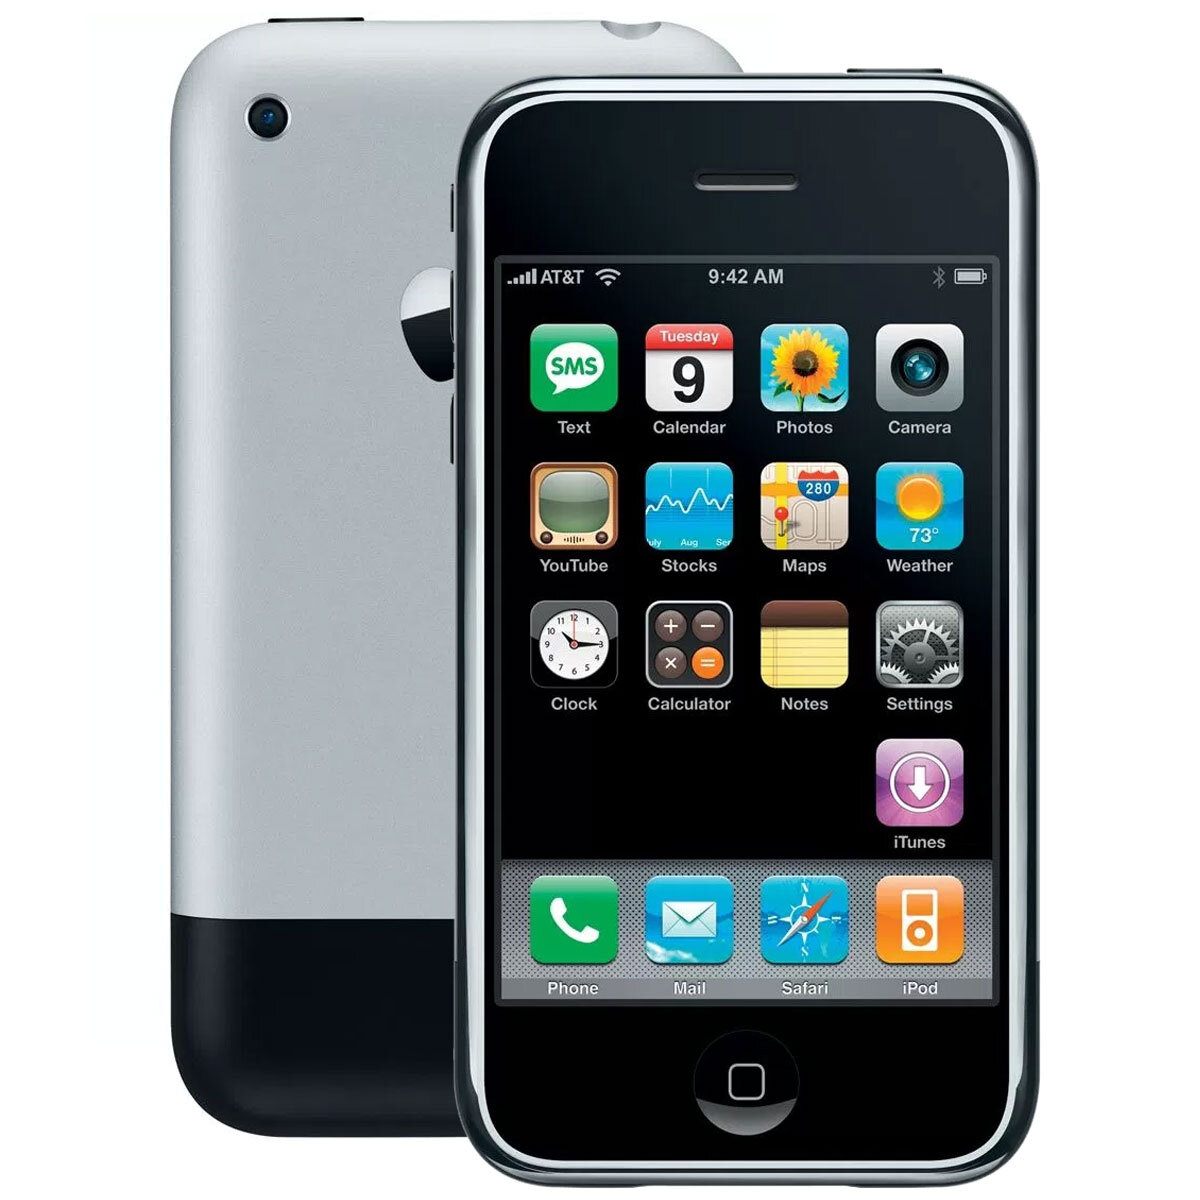 Лайфон. Iphone 1 2007. Iphone 2g. Эпл айфон 2g. Iphone 2g 2007.